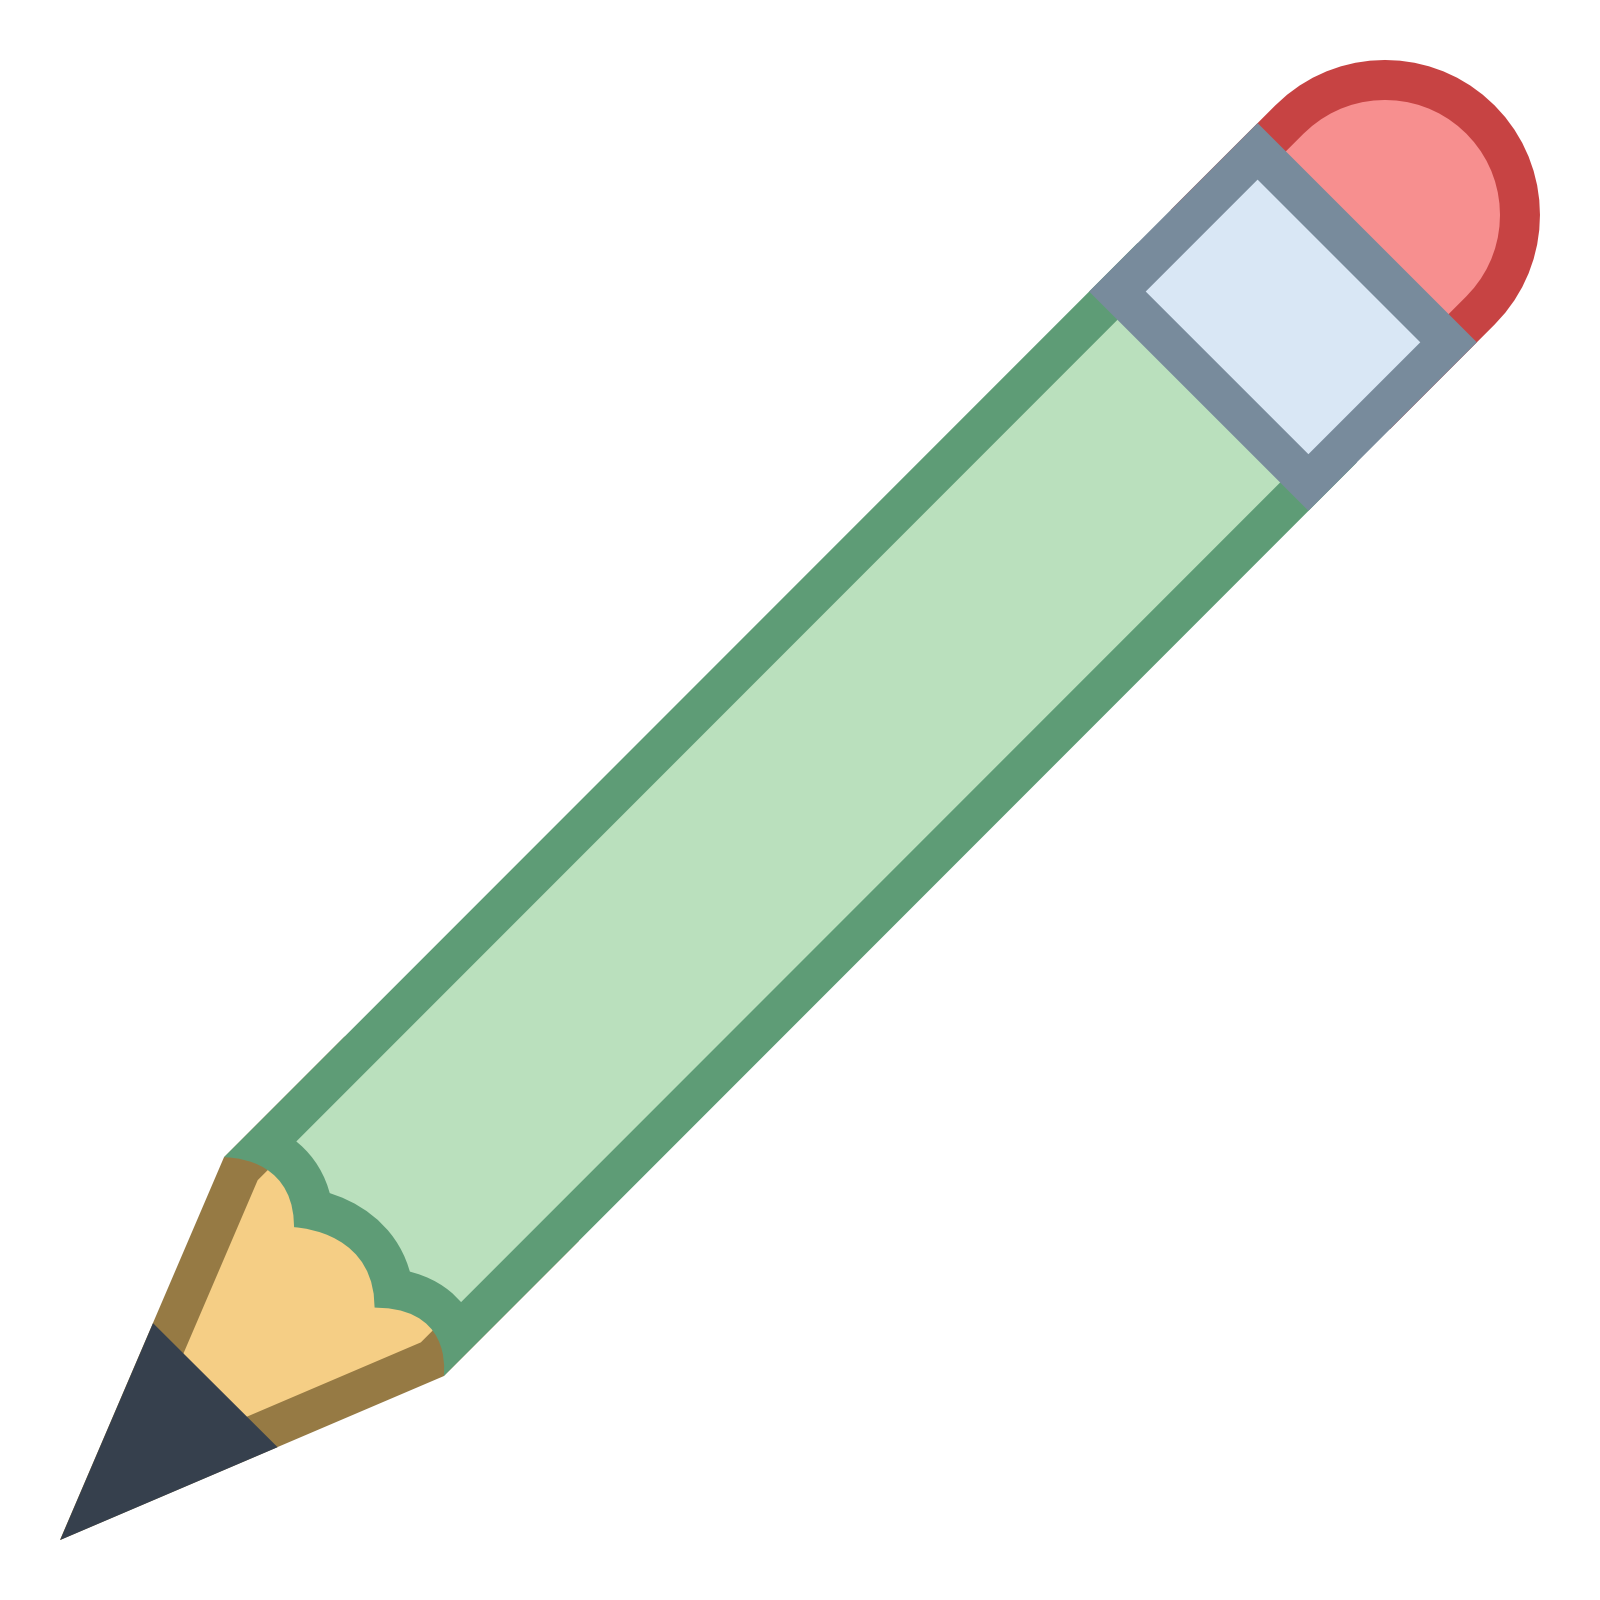 Pencil Icon Png